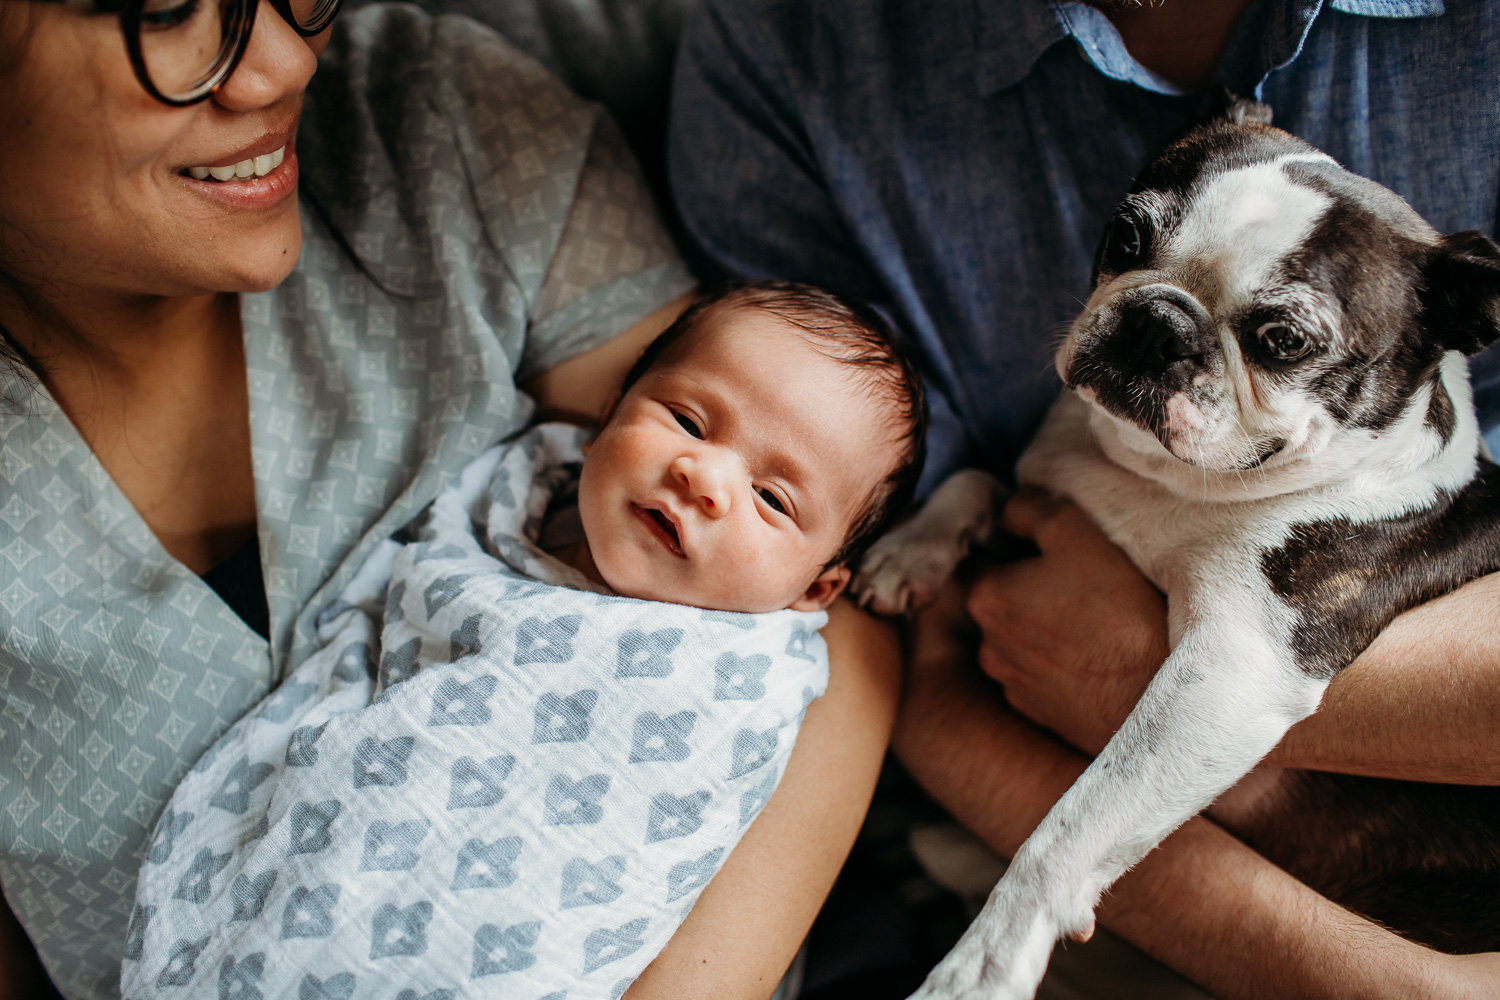 Toronto newborn family portrait with smiling newborn and pet dog